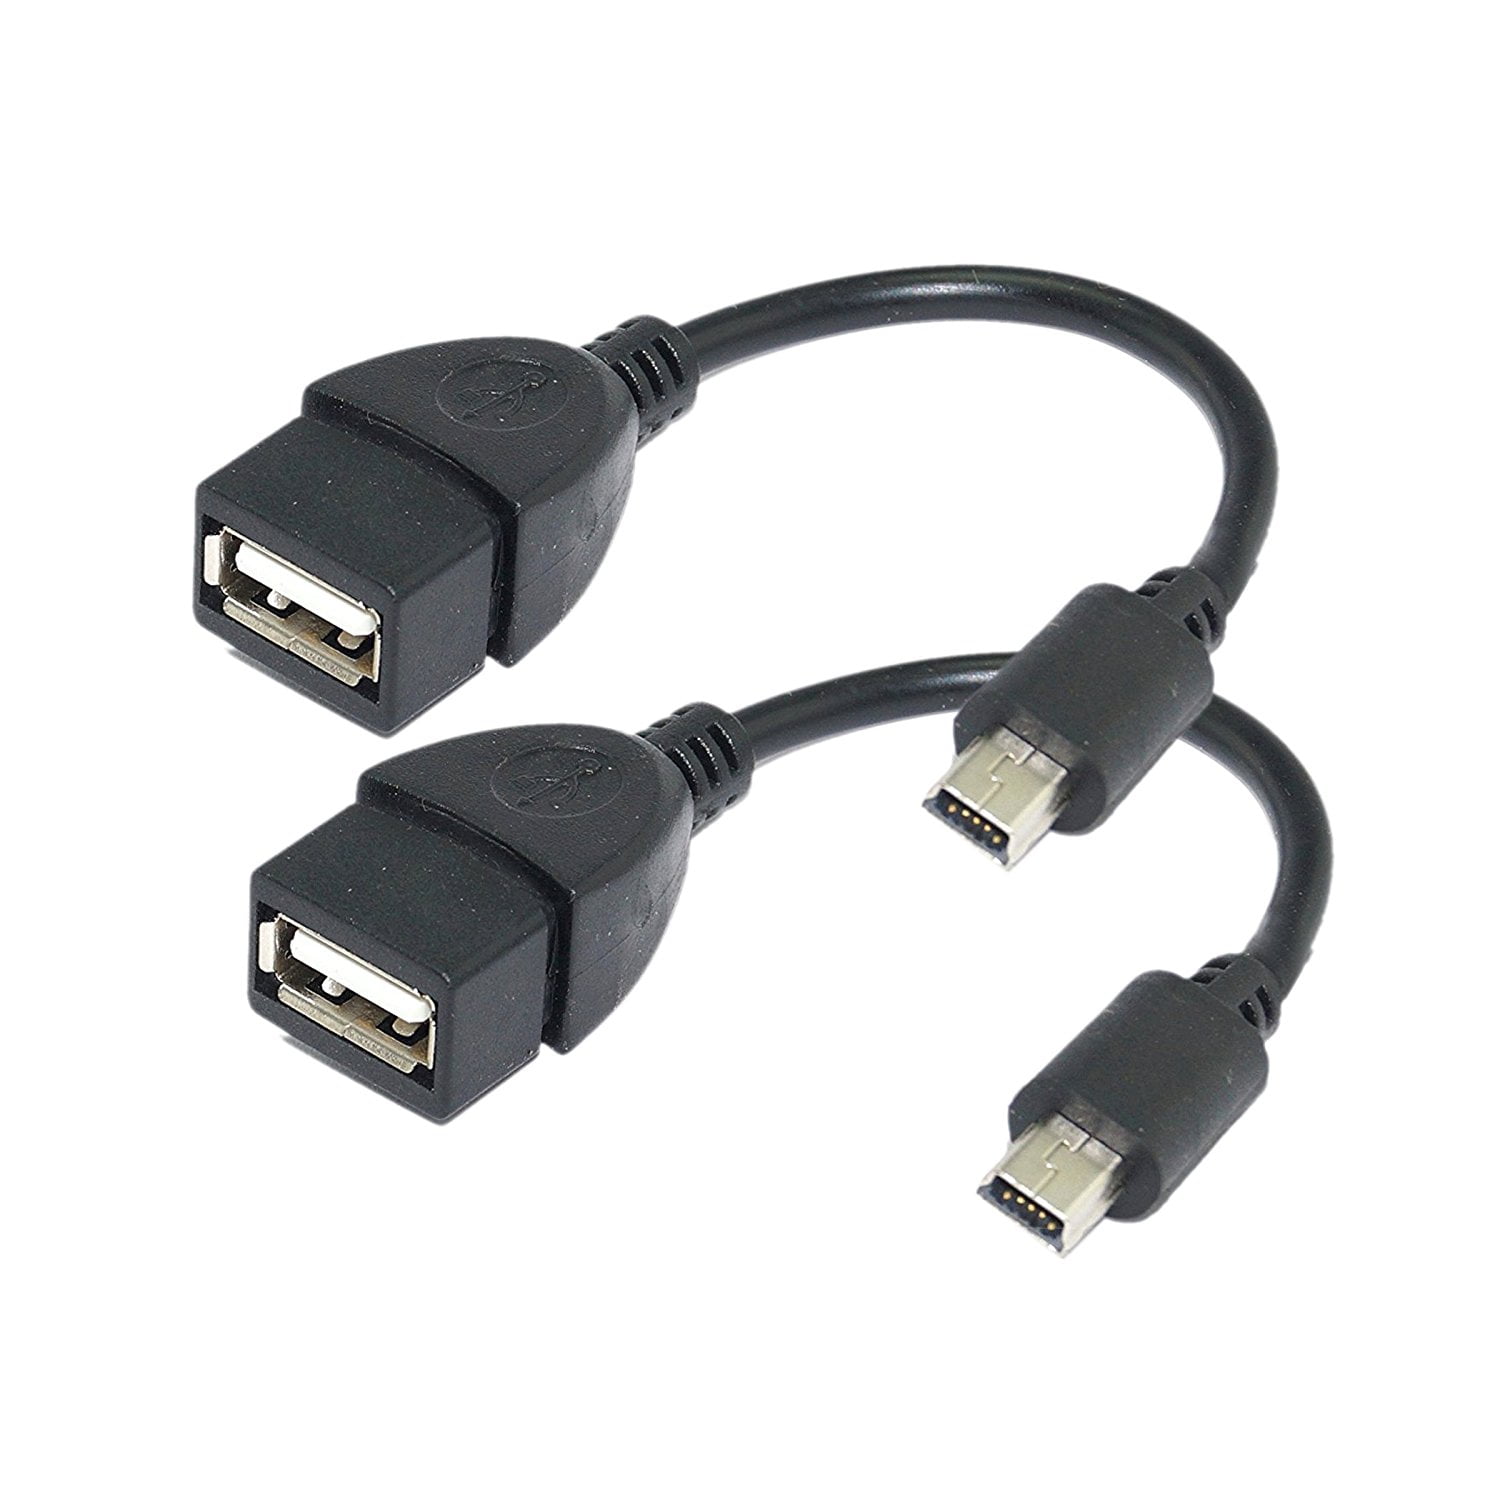 USB OTG Cable